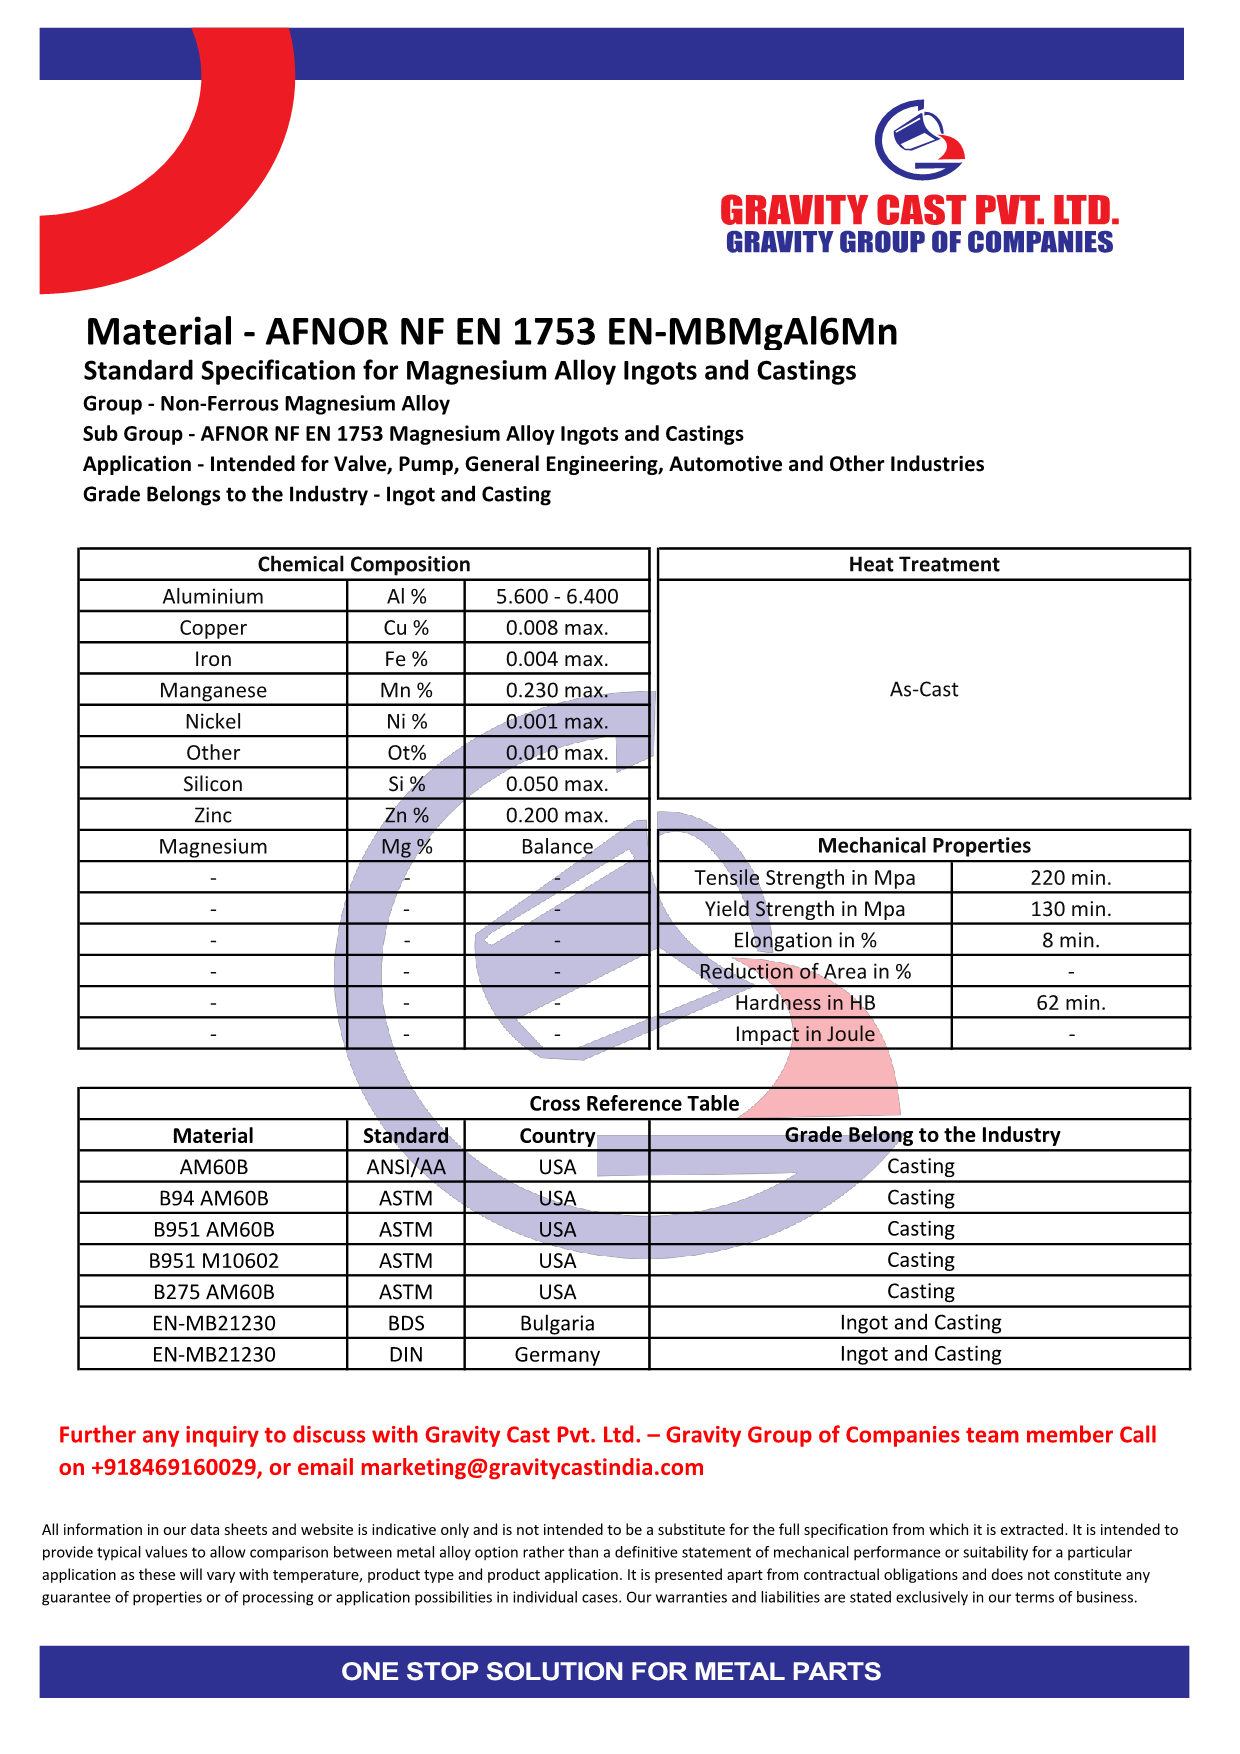 AFNOR NF EN 1753 EN-MBMgAl6Mn.pdf